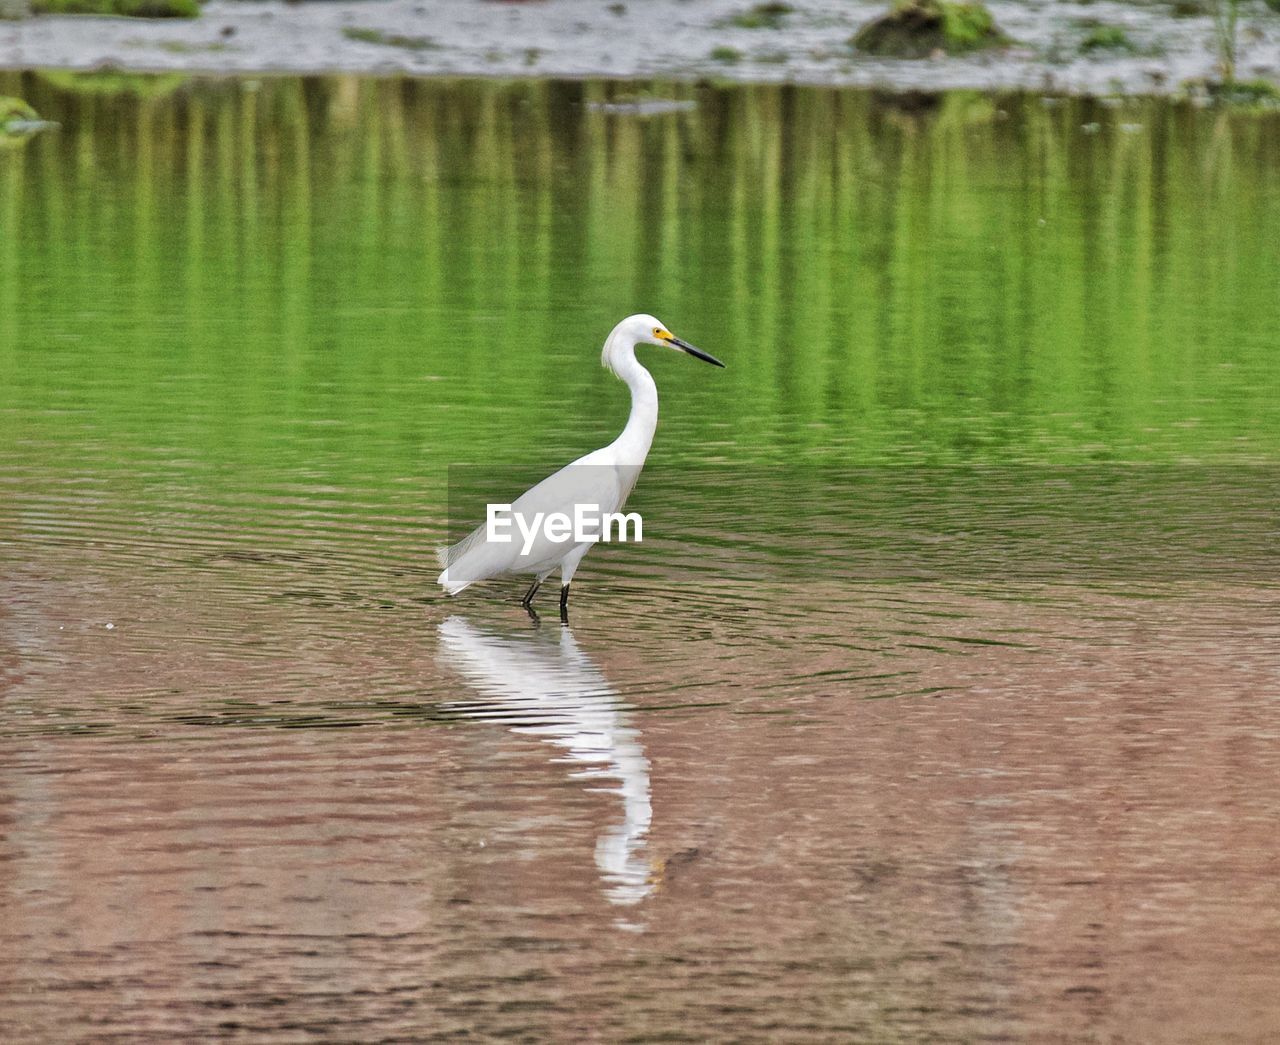 BIRD IN LAKE